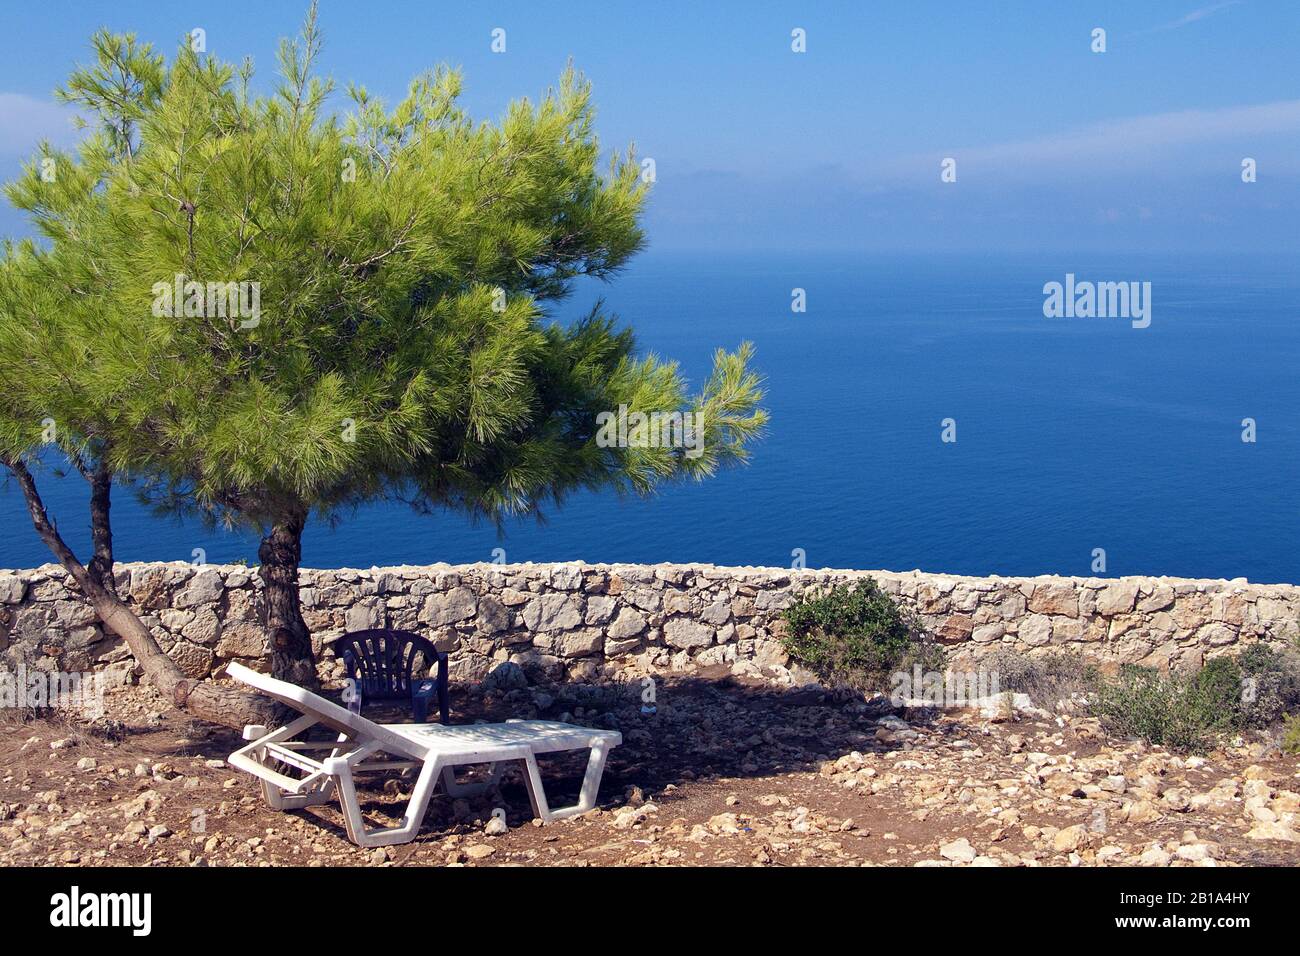 Sunbed under a tree, shady space with seaview, Limni Keriou, Zakynthos island, Greece Stock Photo